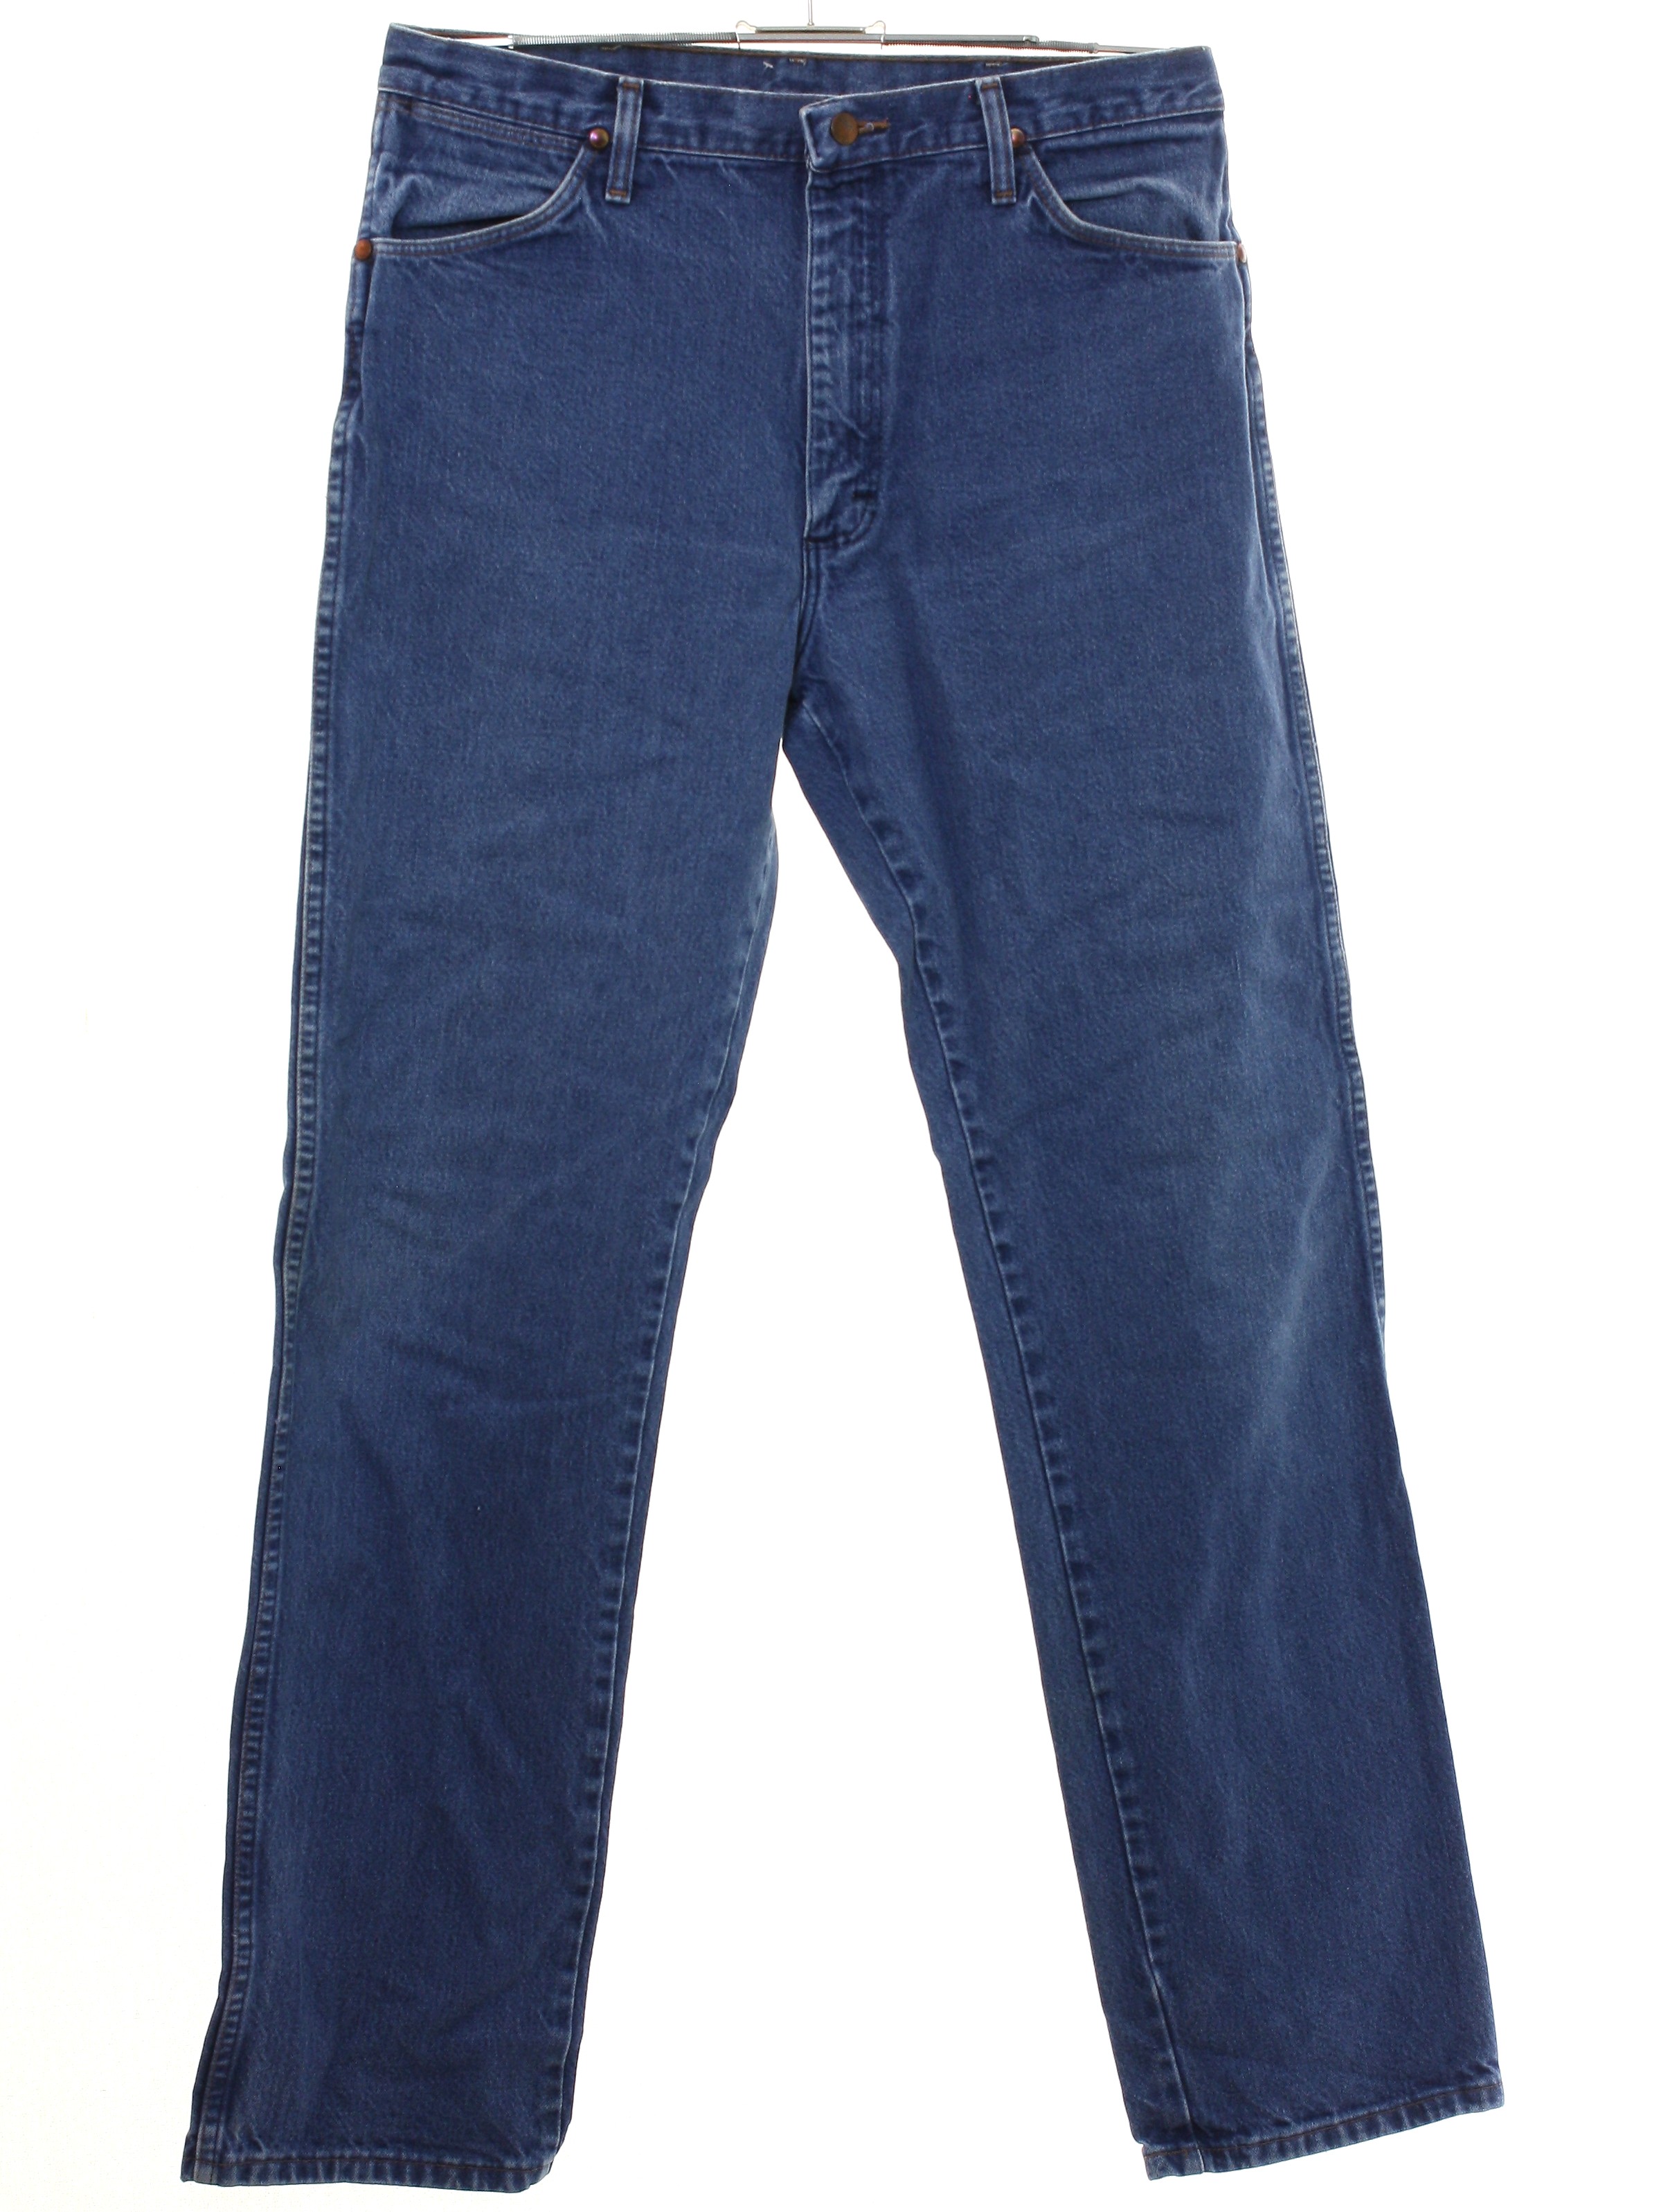 Retro 1980's Pants (Wrangler) : 80s -Wrangler- Mens faded blue cotton ...